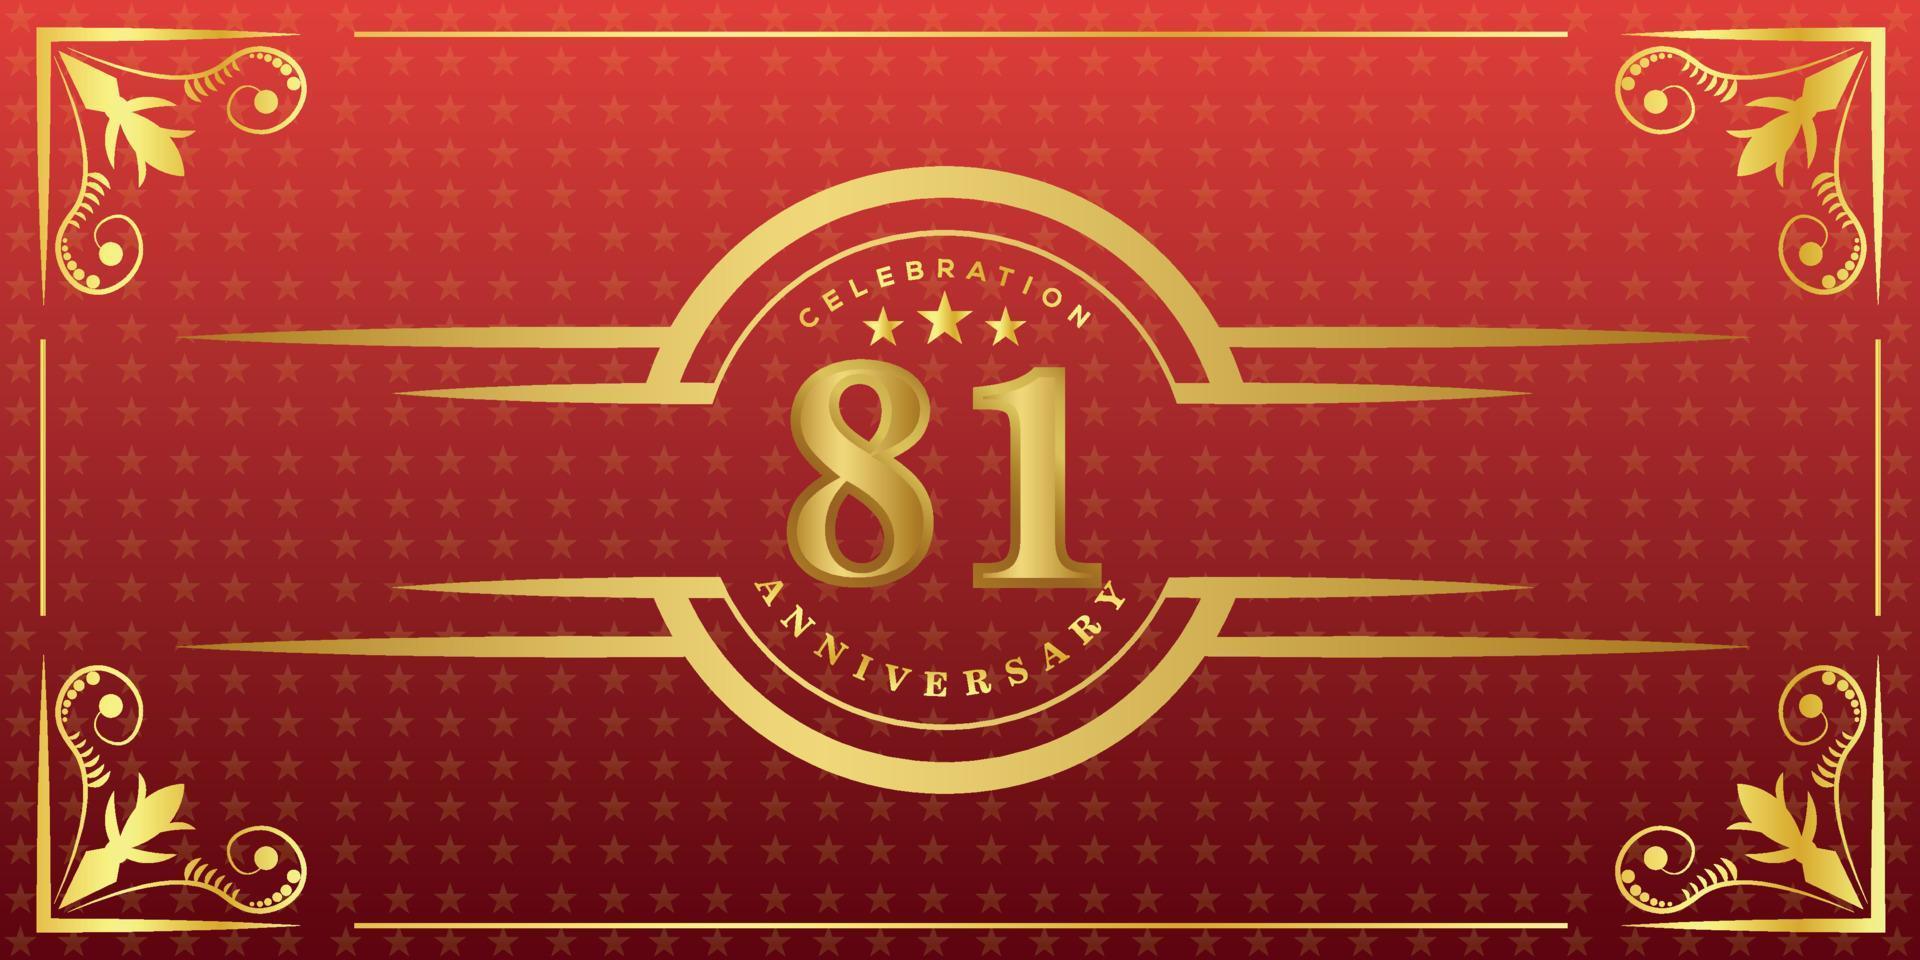 81ste verjaardag logo met gouden ring, confetti en goud grens geïsoleerd Aan elegant rood achtergrond, fonkeling, vector ontwerp voor groet kaart en uitnodiging kaart